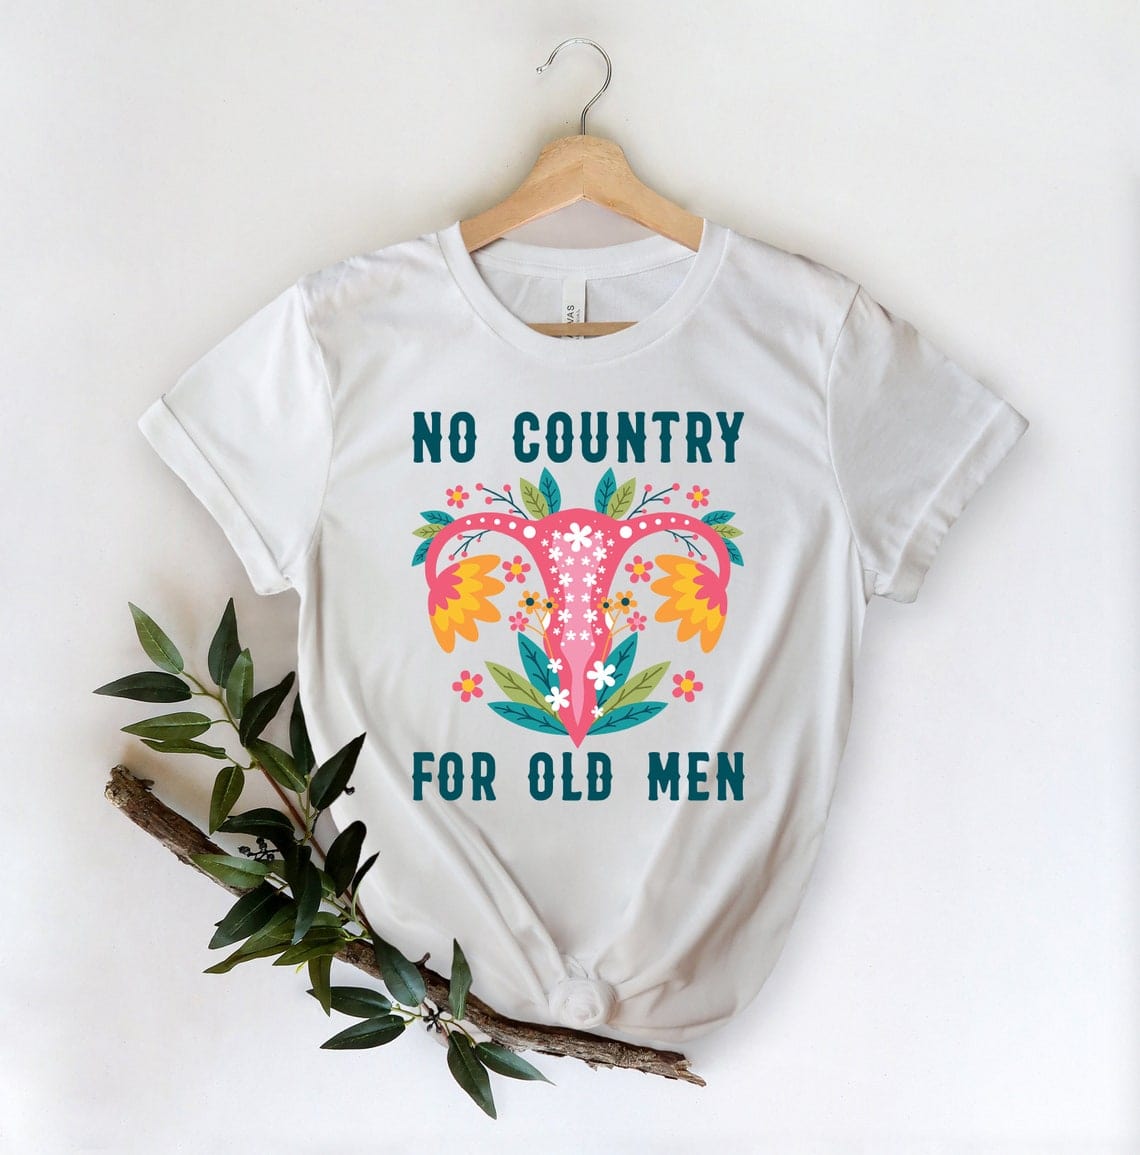 GeckoCustom No Country For Old Men, Women Rights Shirt, T368 HN590